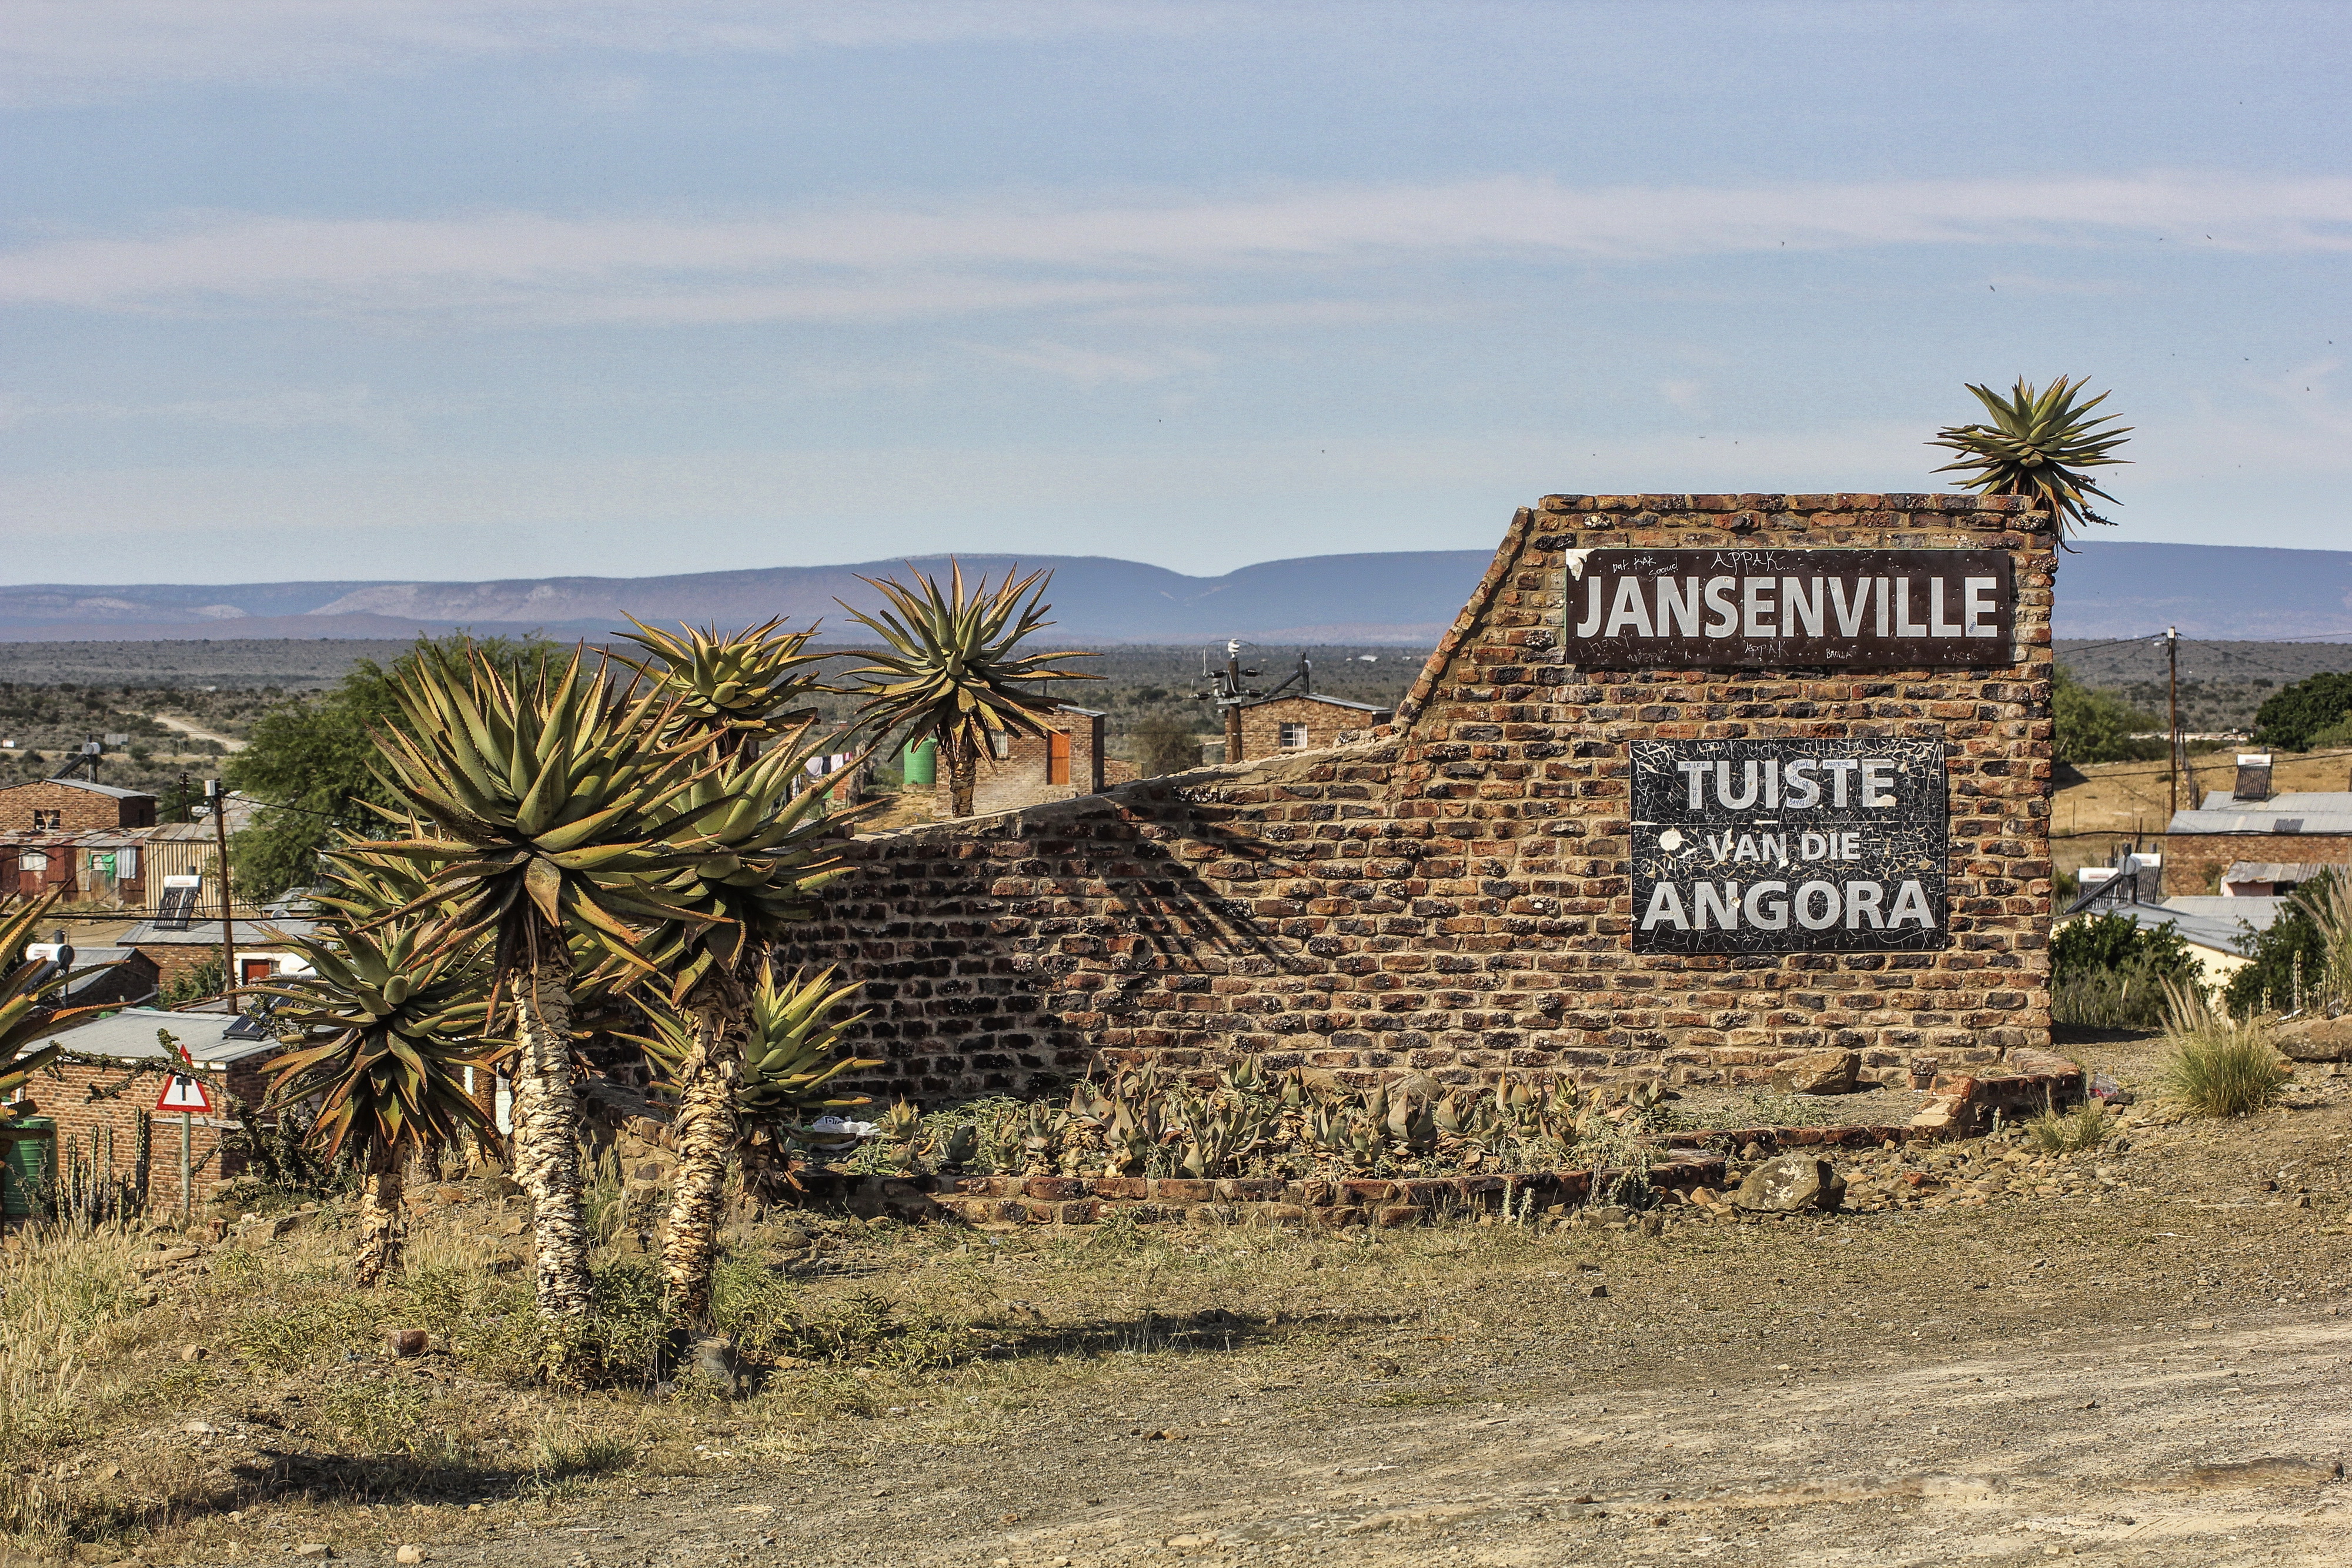 Jansenville, deep in the Noorsveld. Image: Chris Marais